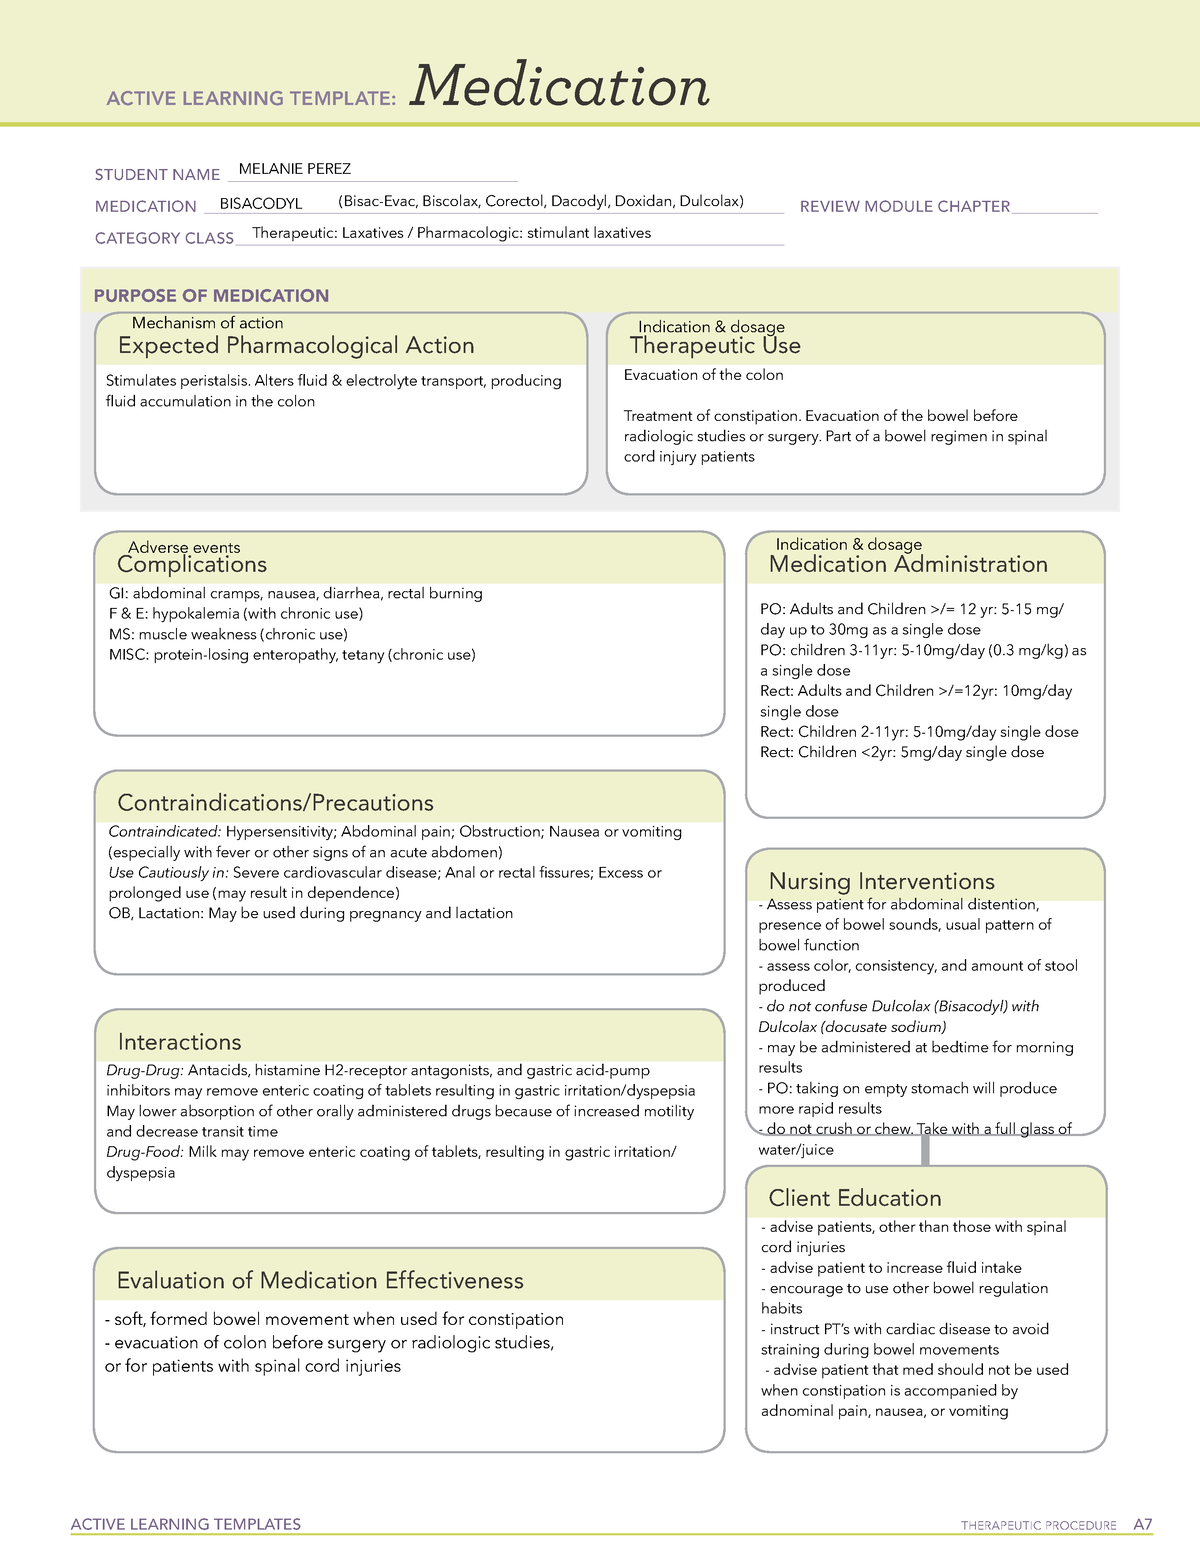 Bisacodyl Med Card Fundamentals of Nursing ACTIVE LEARNING TEMPLATES